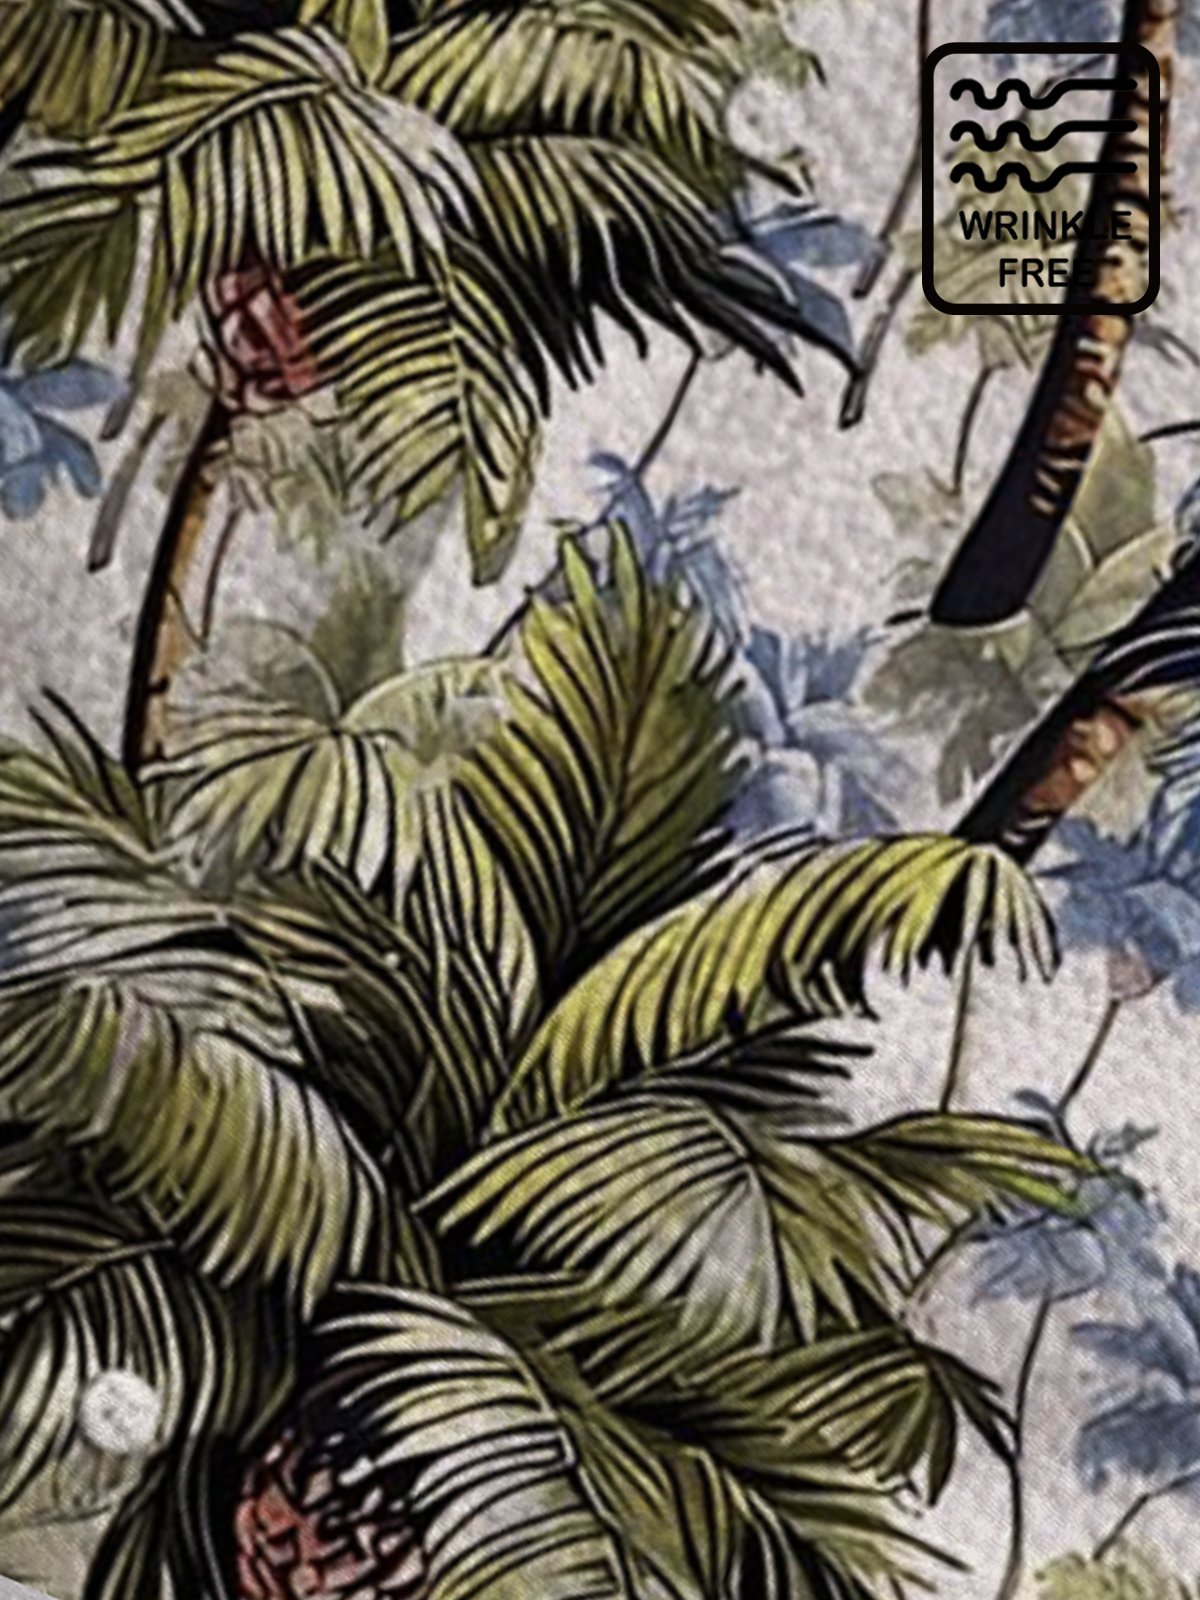 Royaura Vintage Art Floral Men's Long Sleeve Shirts Coconut Palm Tree Stretch Oversized Aloha Camp Button Shirts